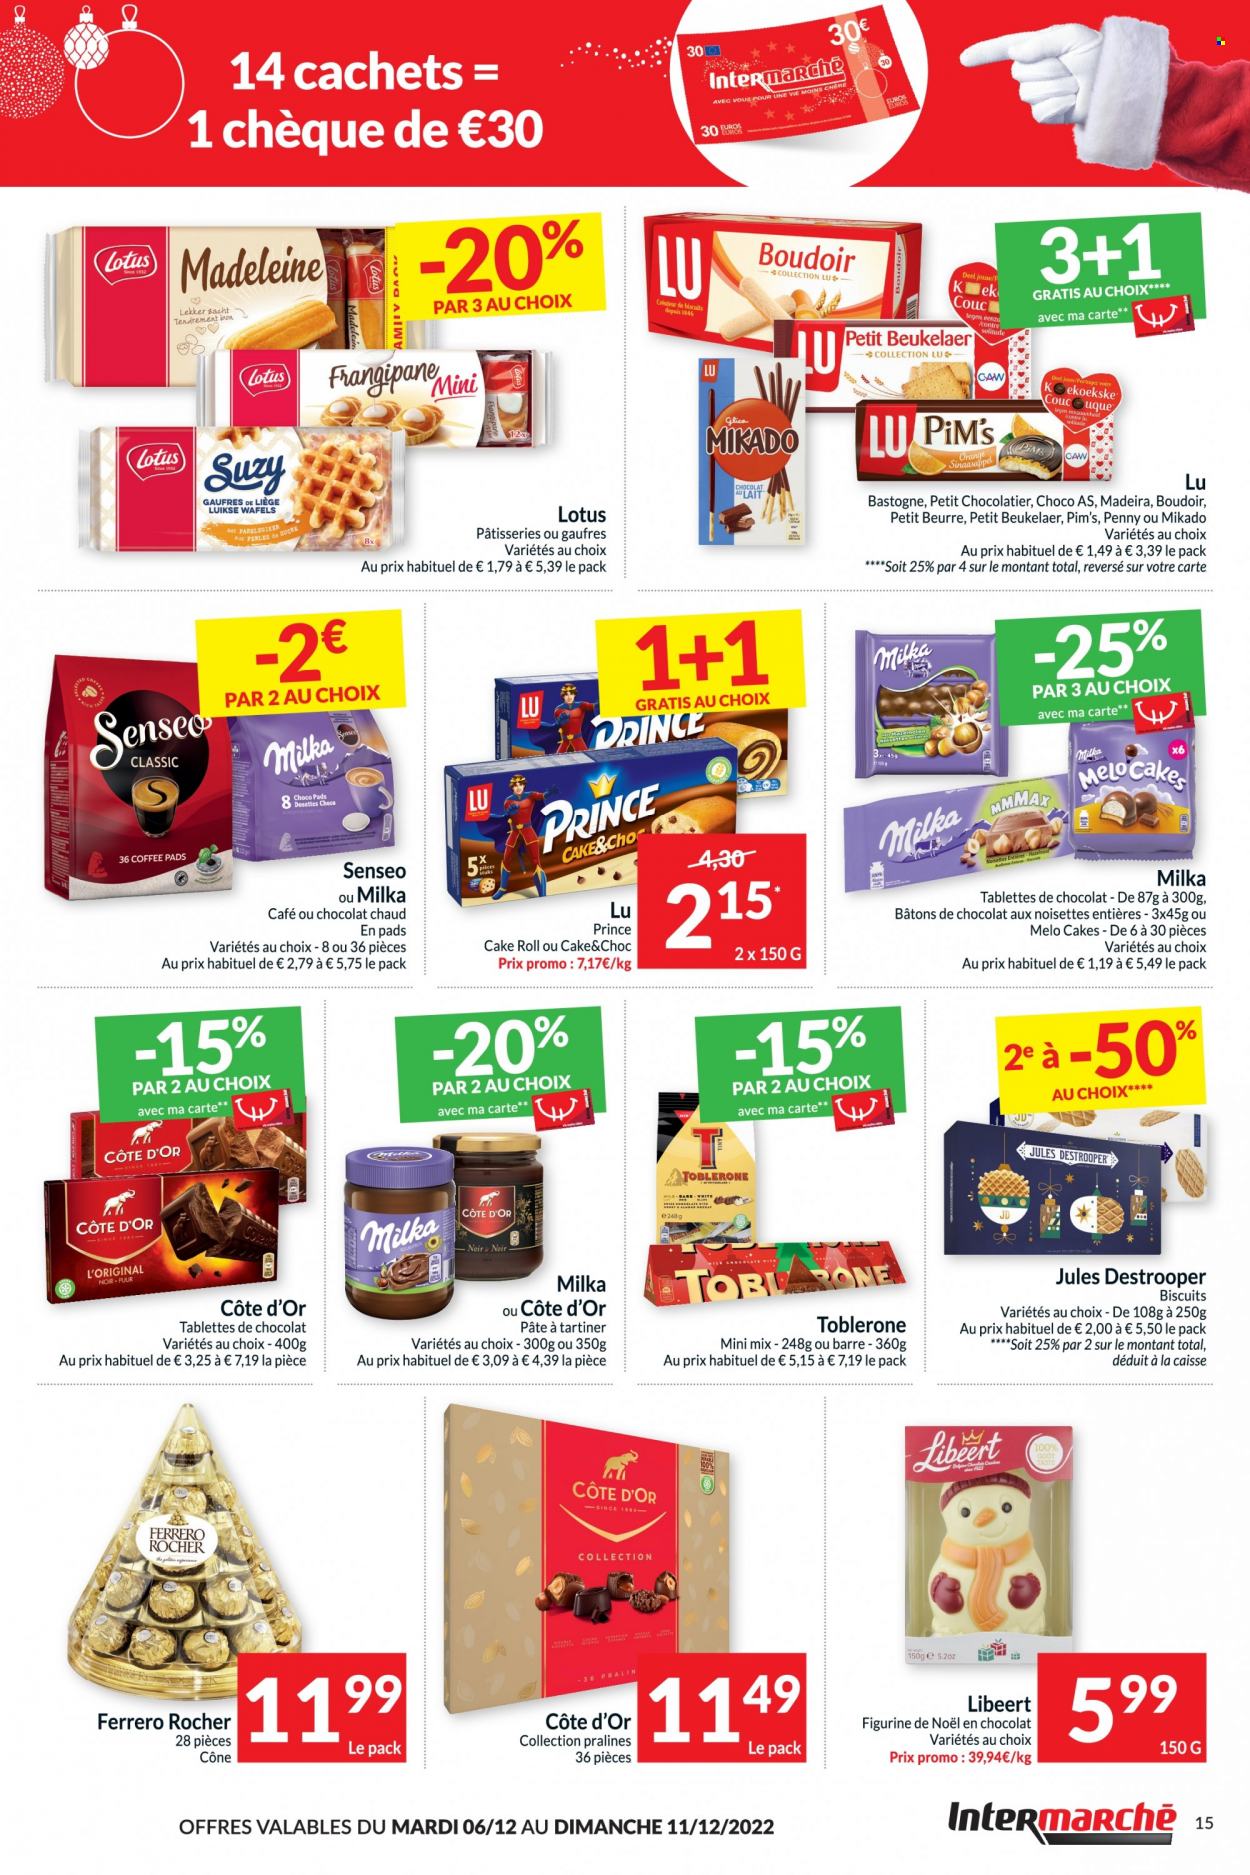 thumbnail - Intermarché-aanbieding - 06/12/2022 - 11/12/2022 -  producten in de aanbieding - frangipane, paté, Milka, Ferrero Rocher, hazelnoten, Senseo. Pagina 15.